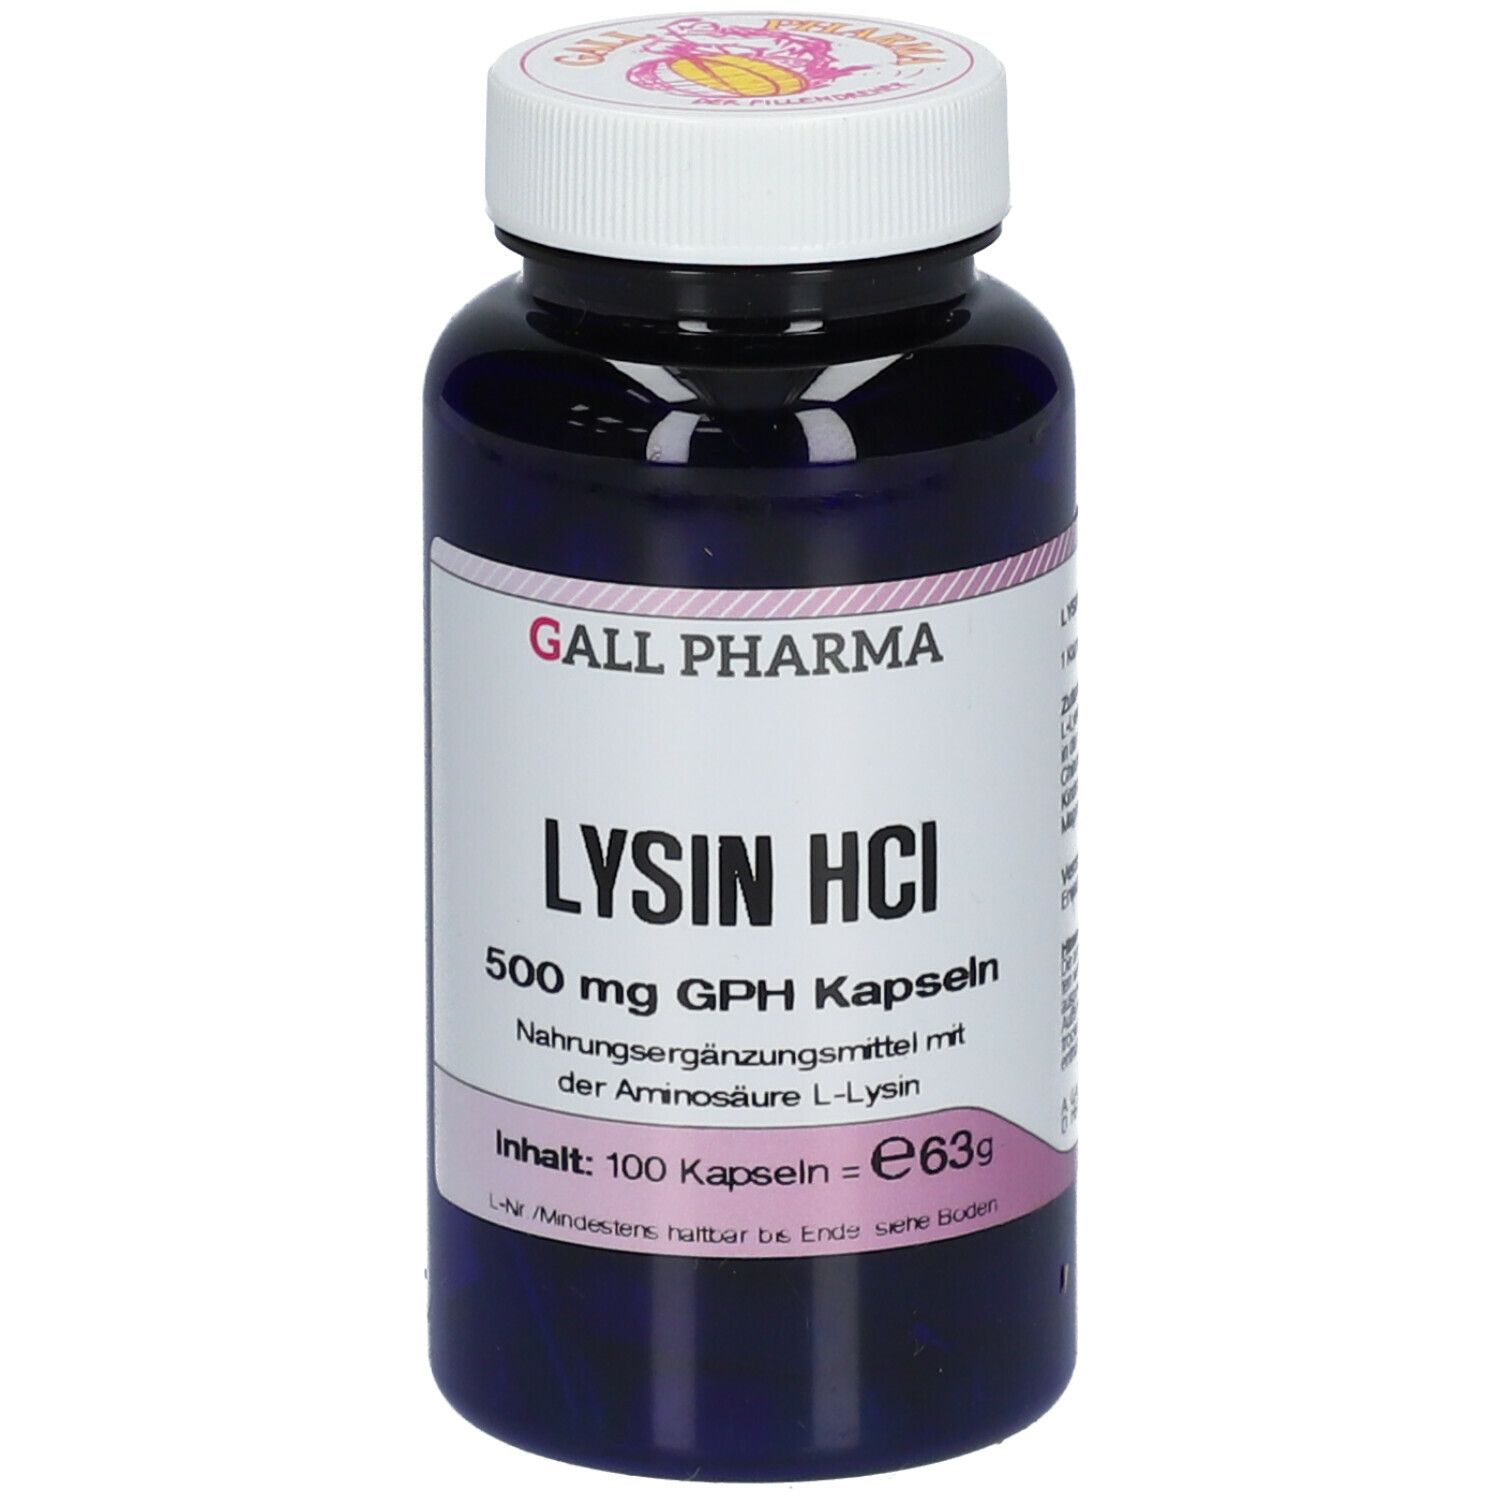 Image of GALL PHARMA Lysin HCl 500 mg GPH Kapseln